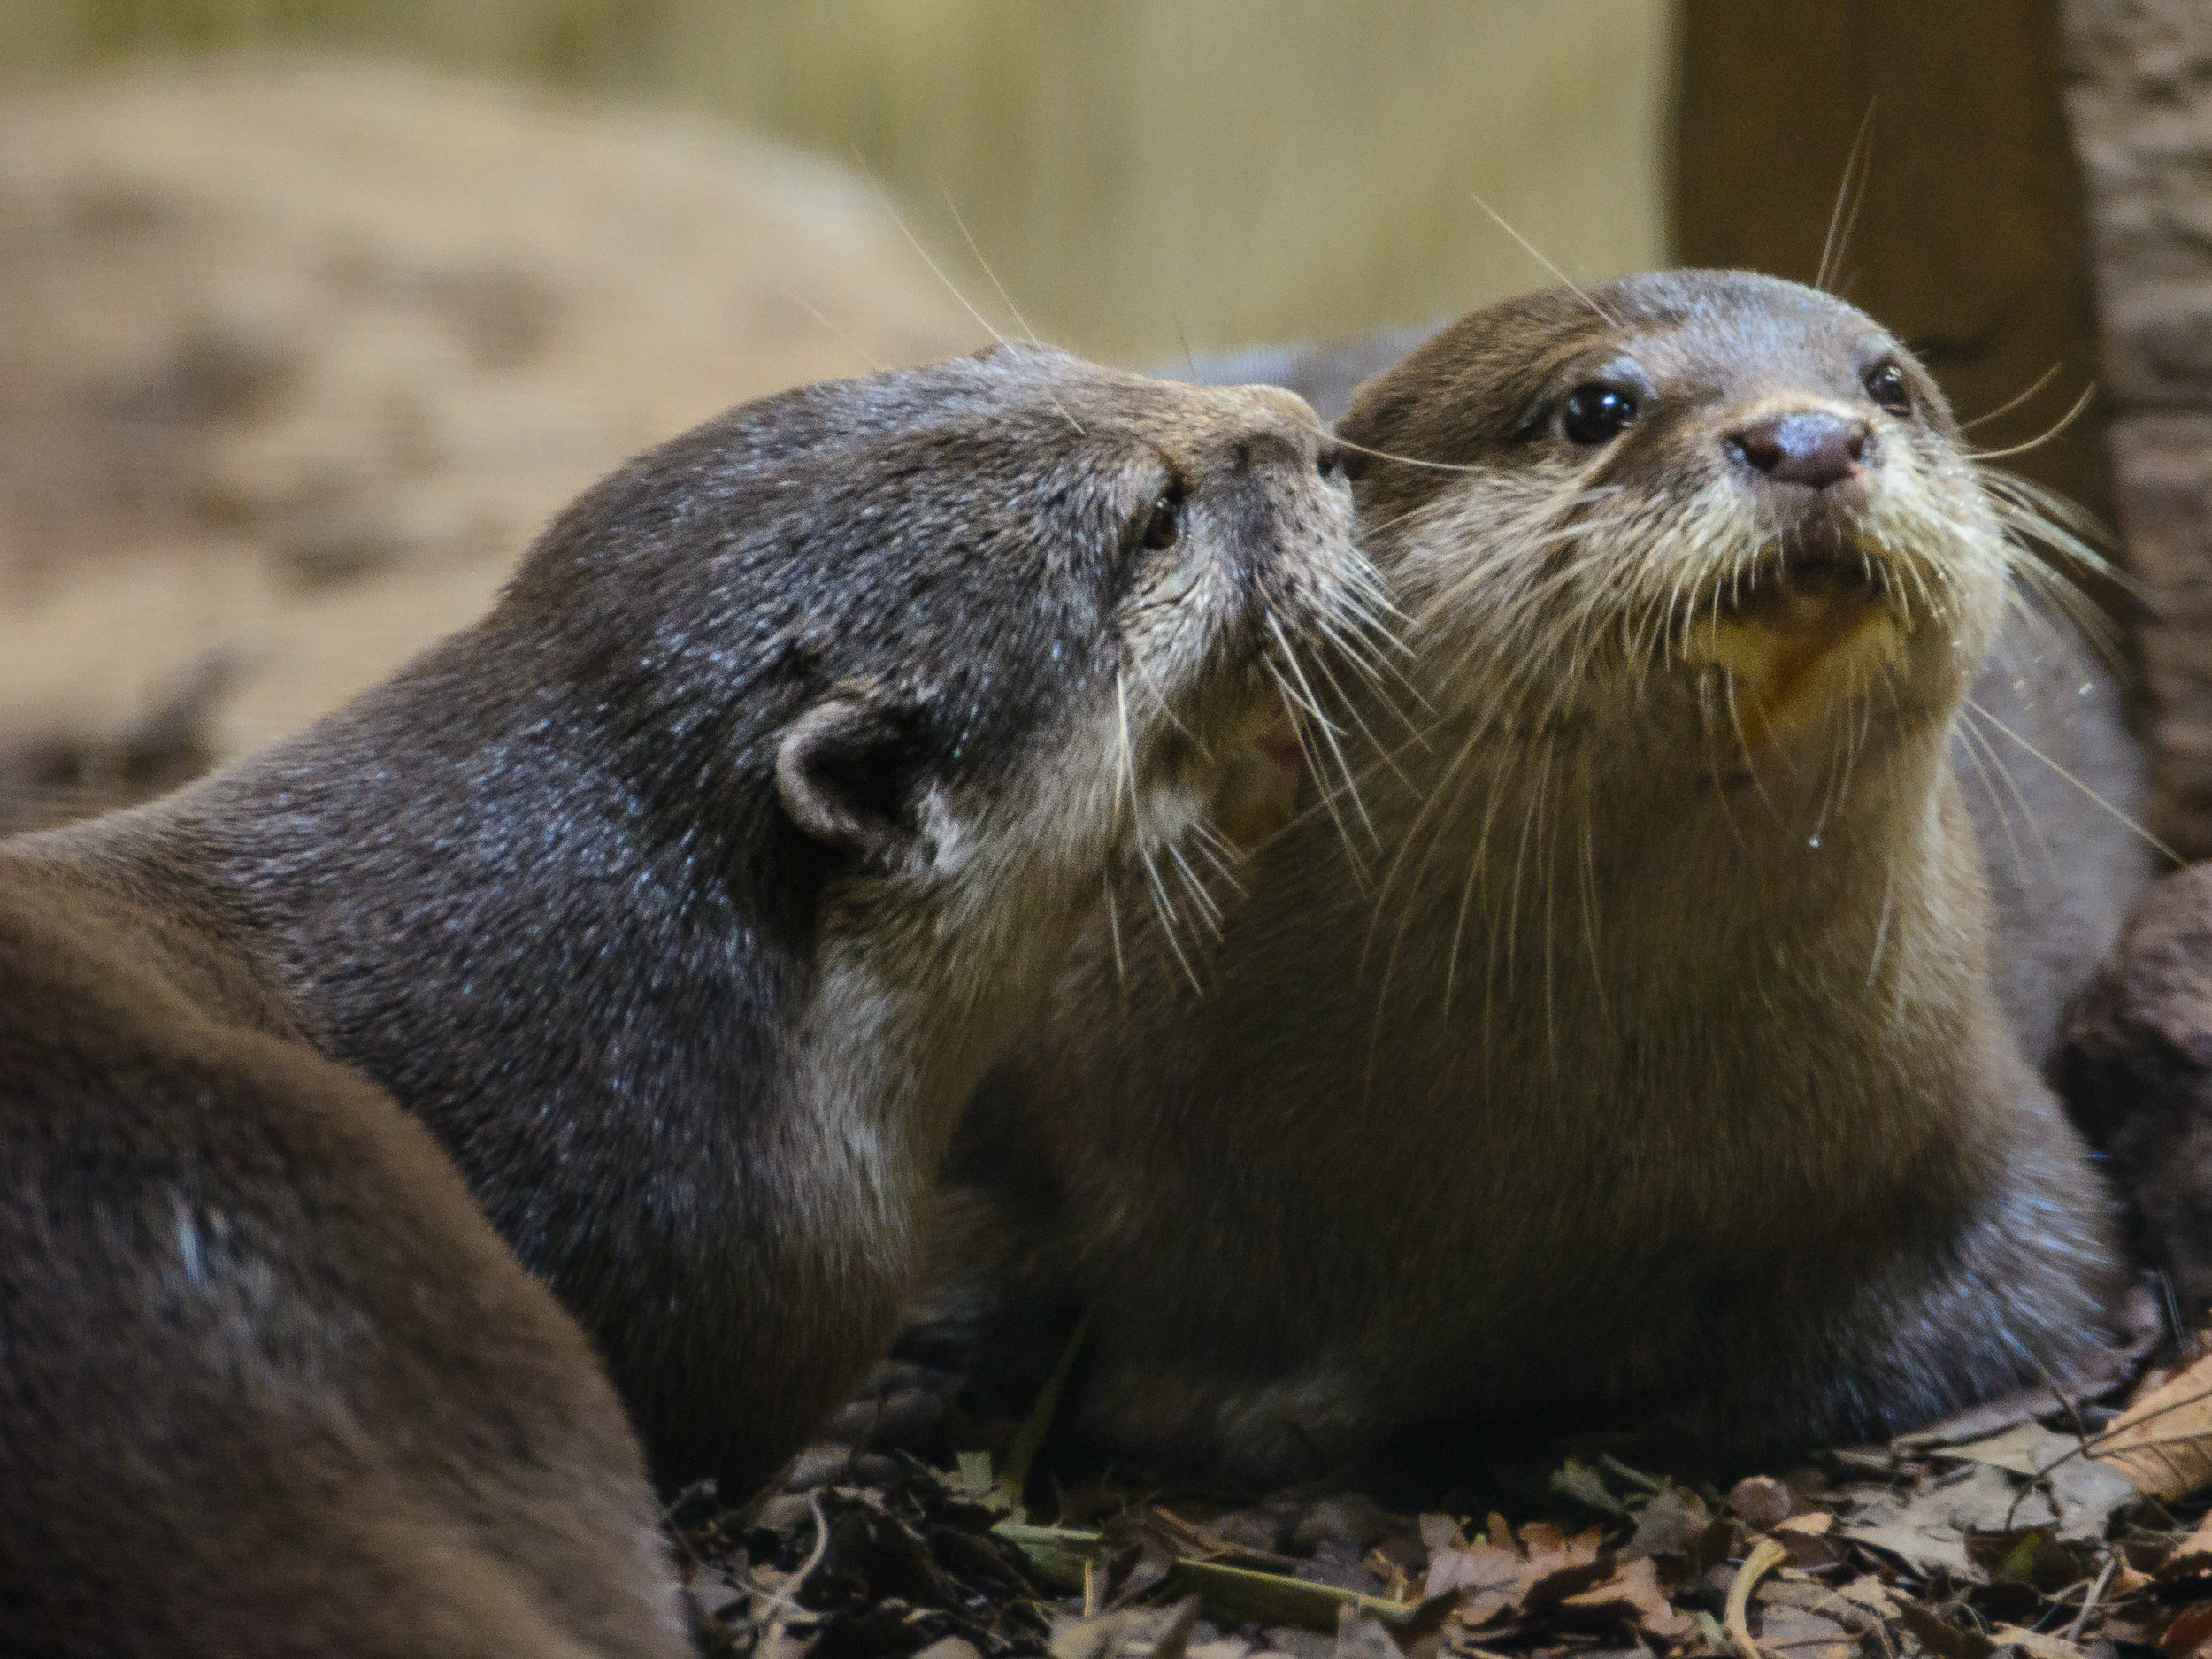 Otter Tells His Friend a Secret